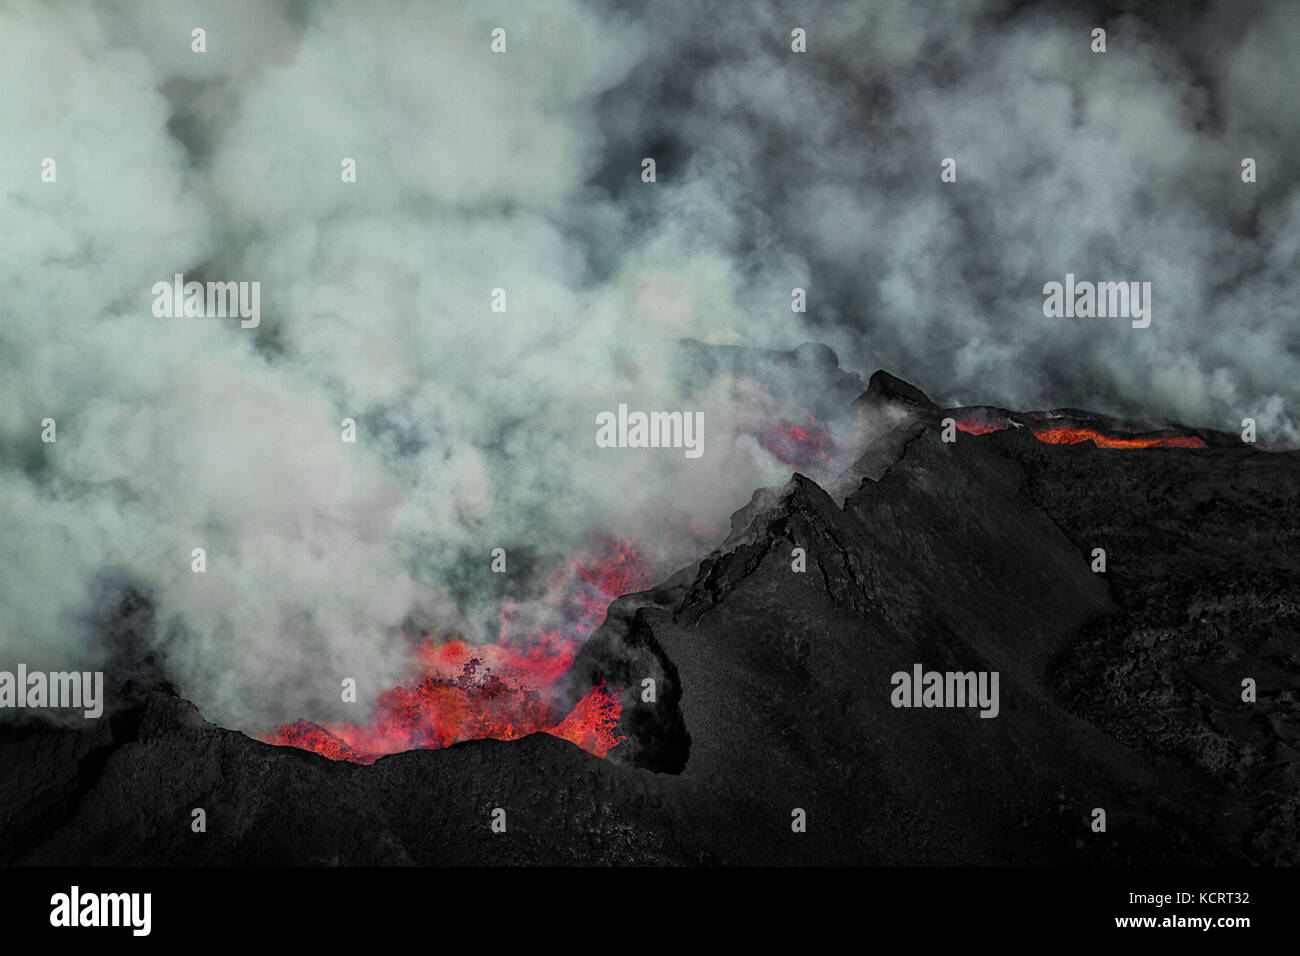 Holuhraun fissure eruption near Bardabunga volcano spewing lava in Iceland Stock Photo